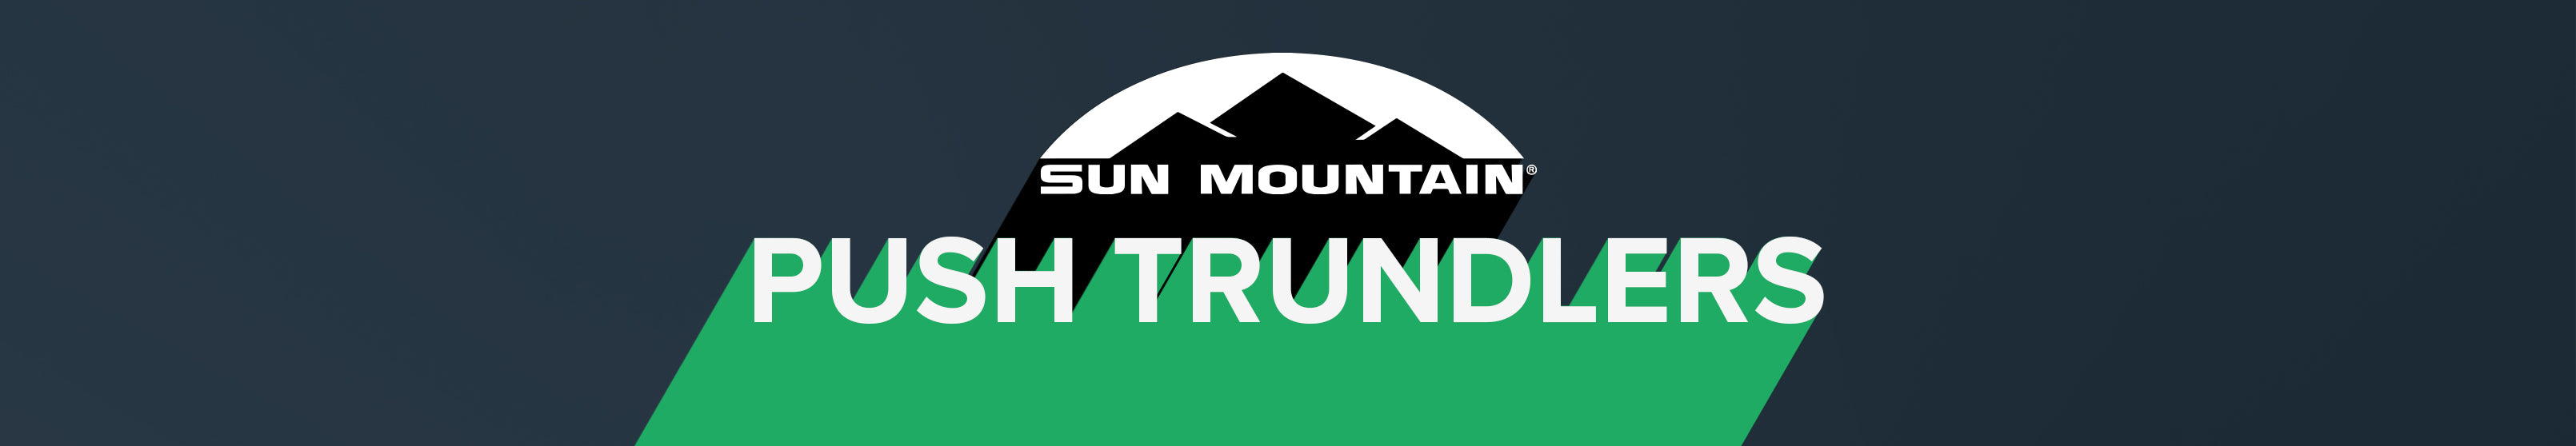 Sun Mountain Trundlers